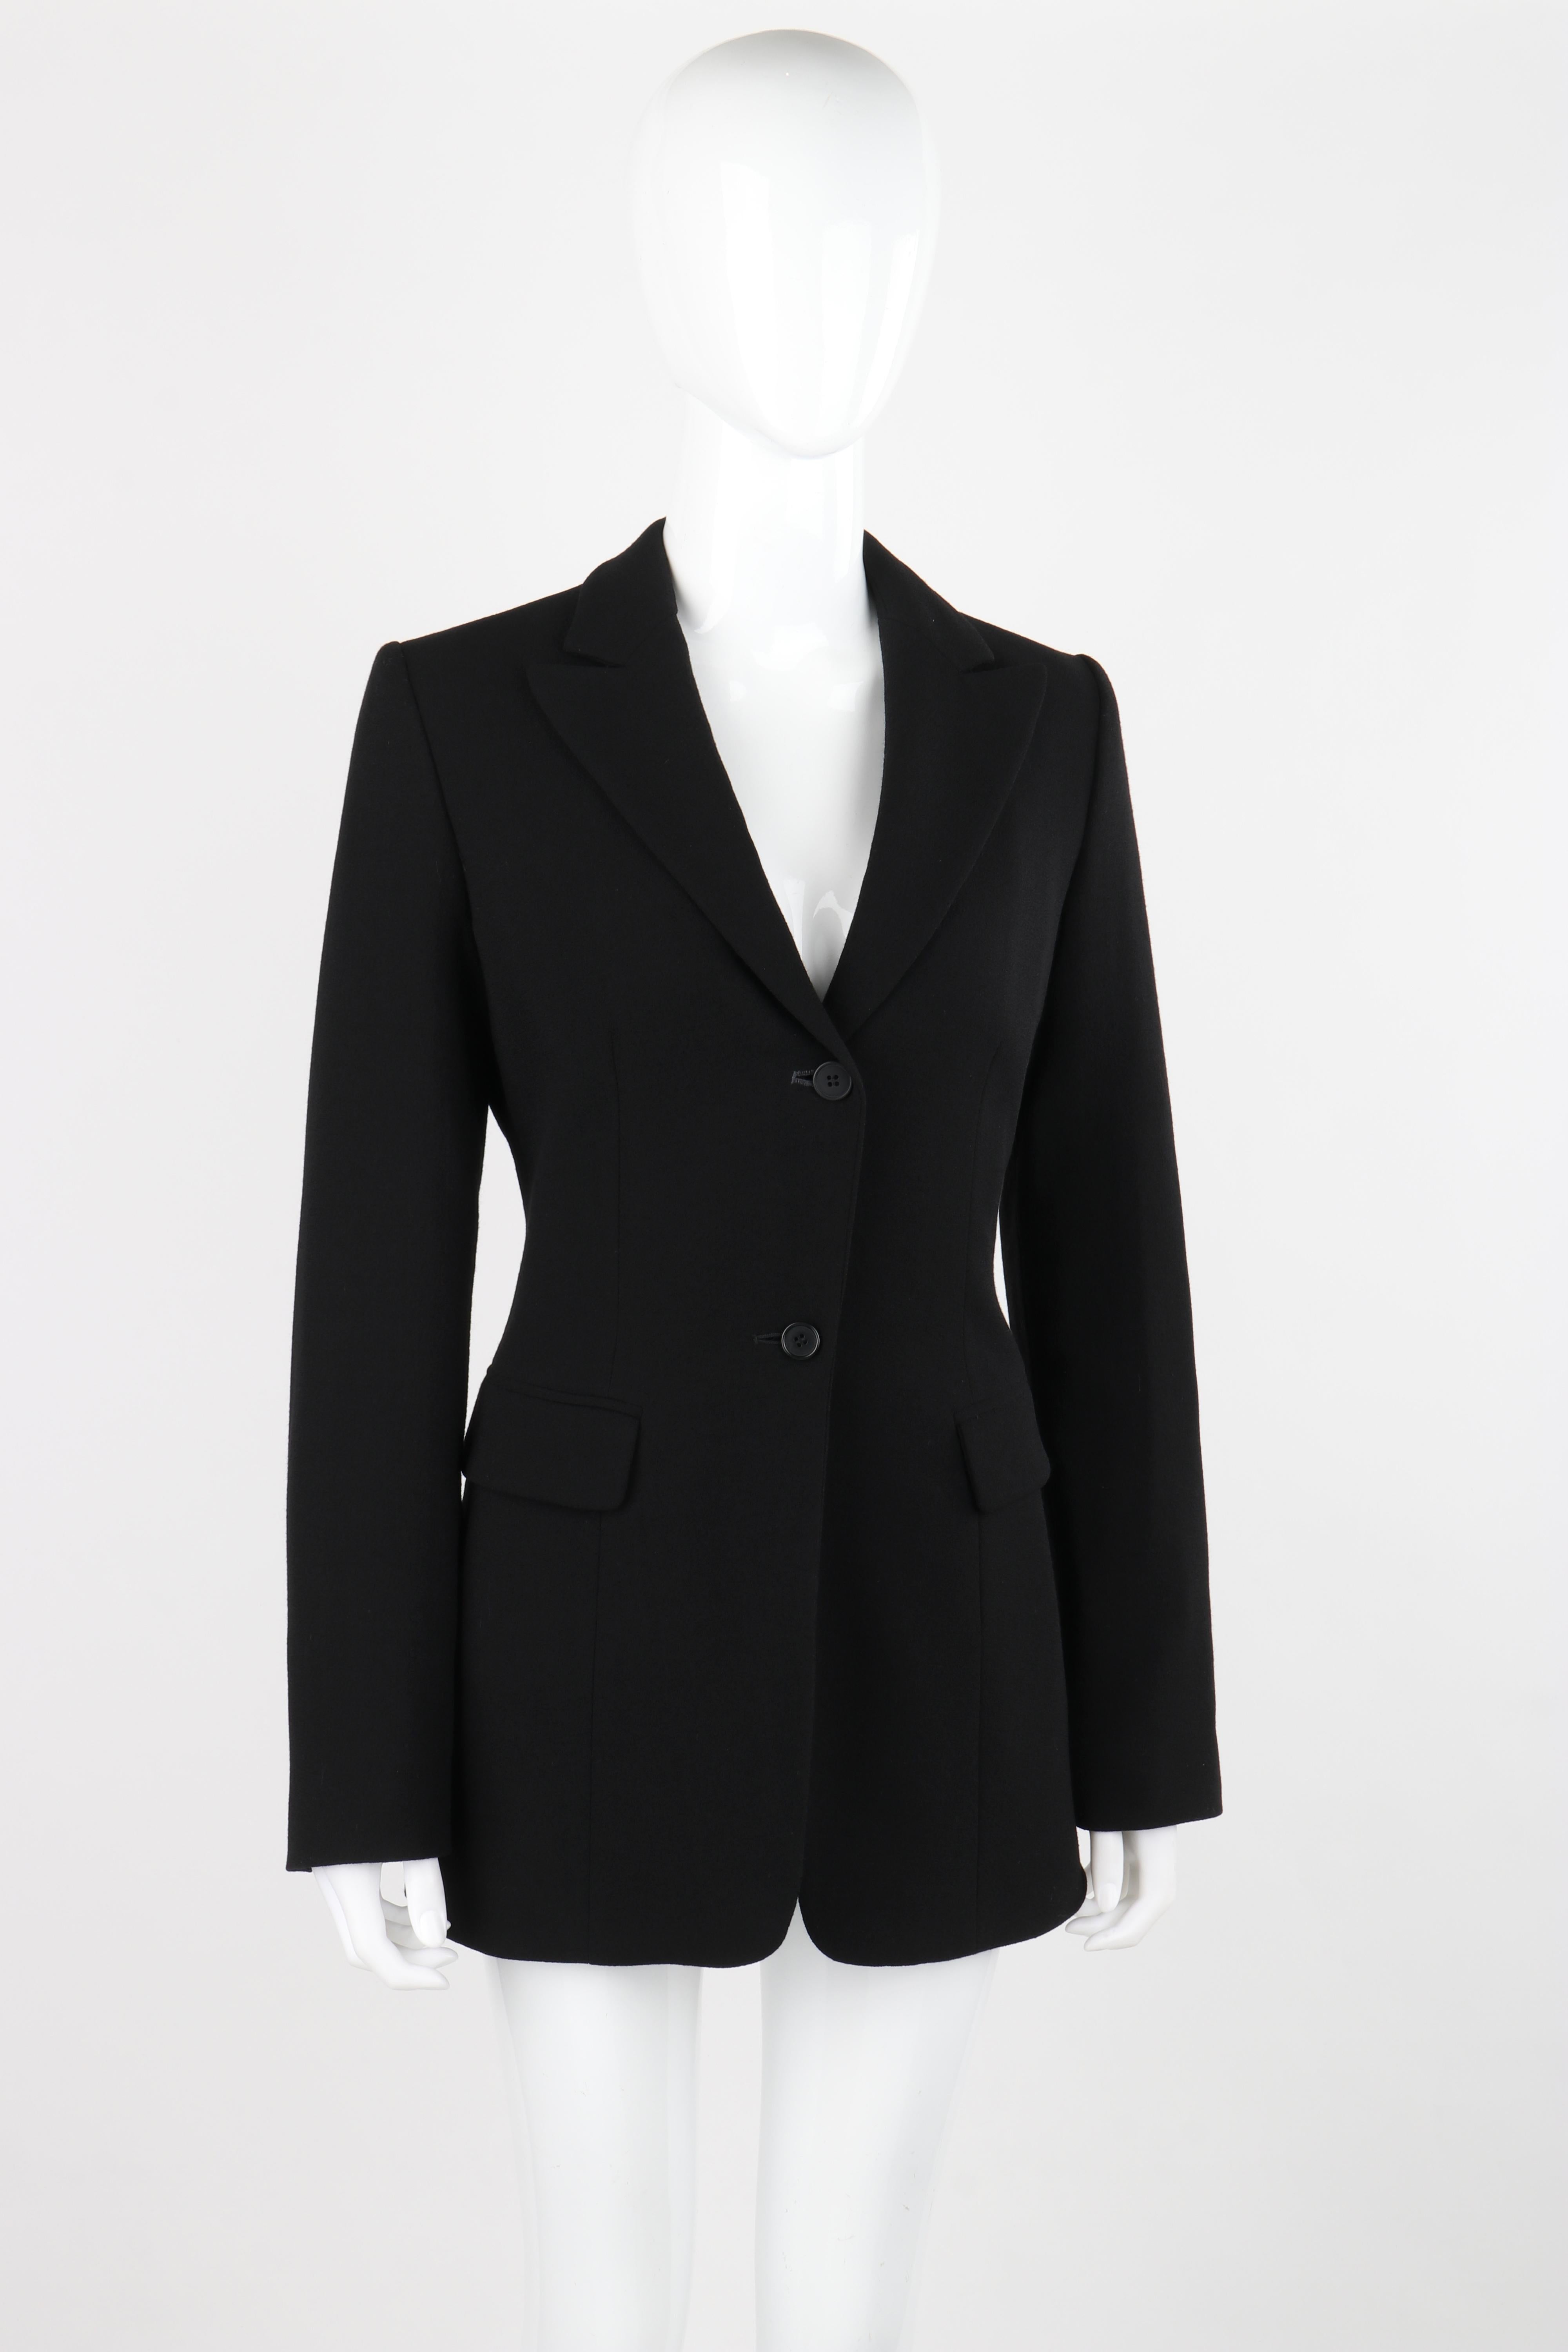 OWEN GASTER c.1990's Vtg Black Wool Structured Zip Open Back Blazer Jacket RARE en vente 2